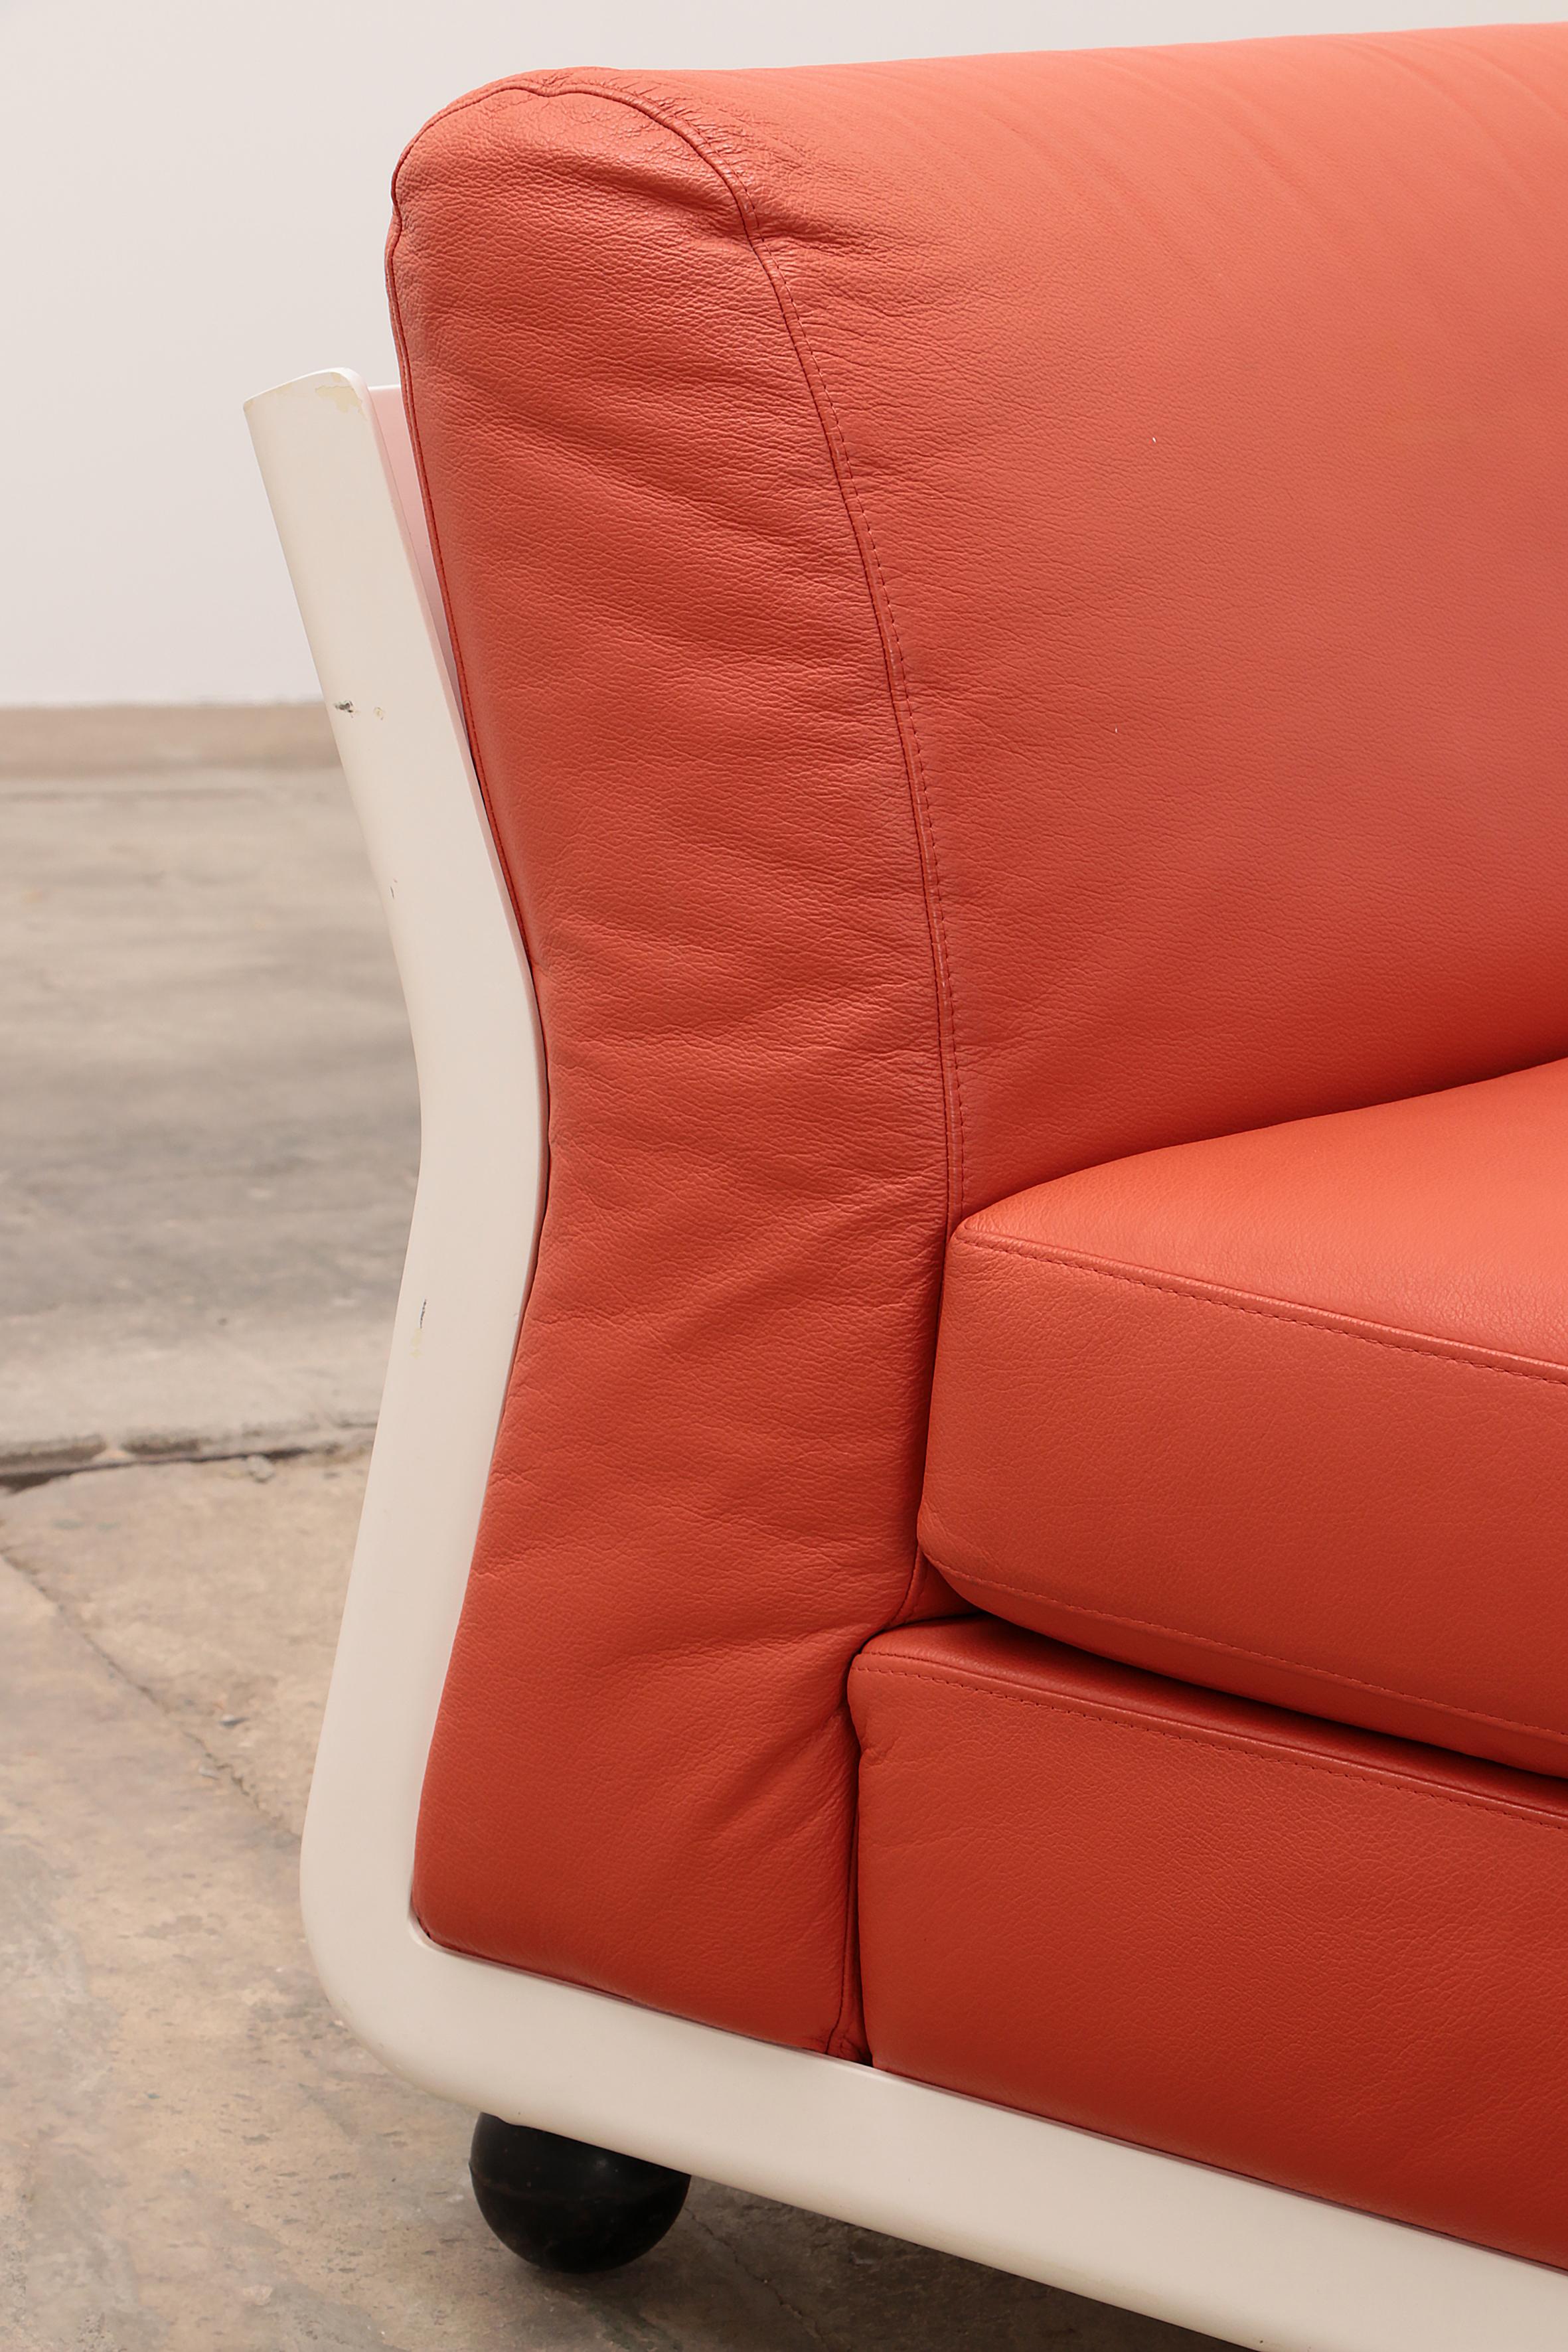 Mario Bellini Amanta Modular Sofa in Orange Leather for C&B Italy, 1960s For Sale 9